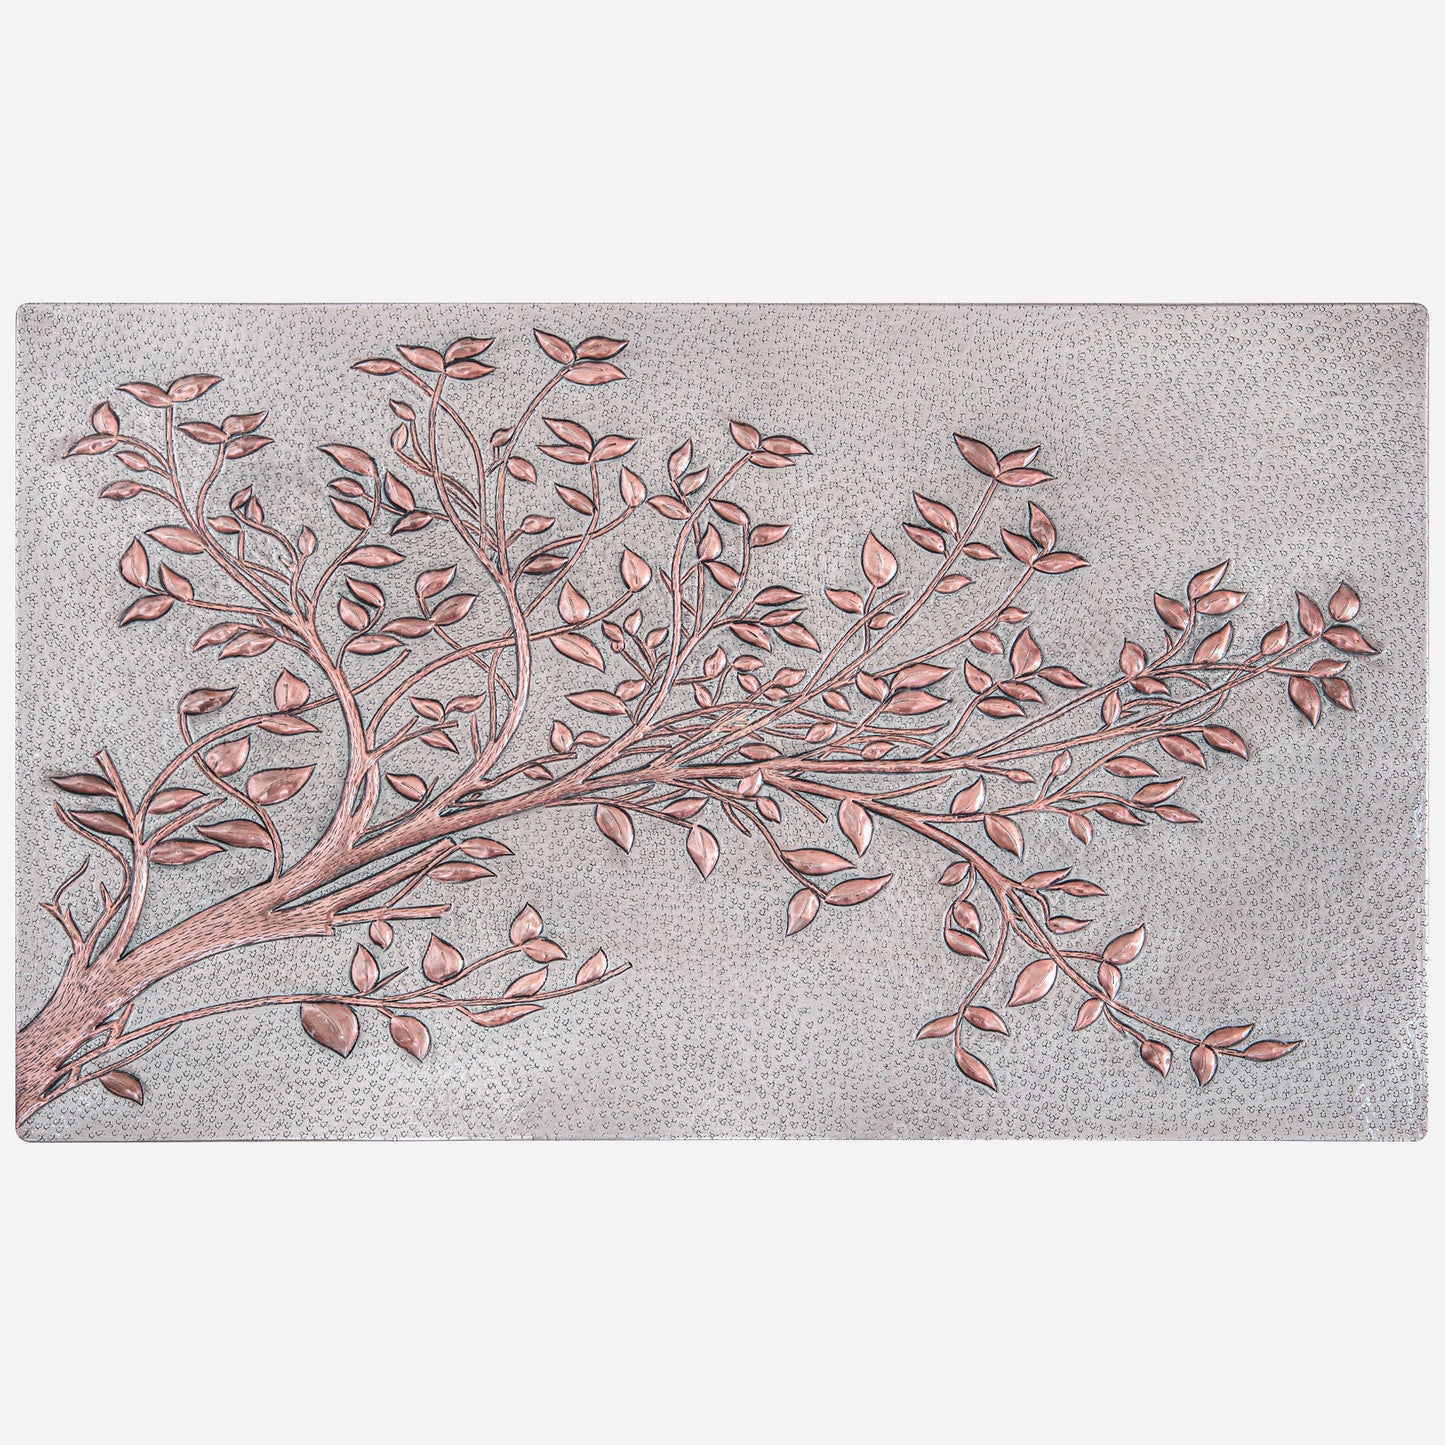 Tree Branches Backsplash Tile - 18"x30" Gray&Copper